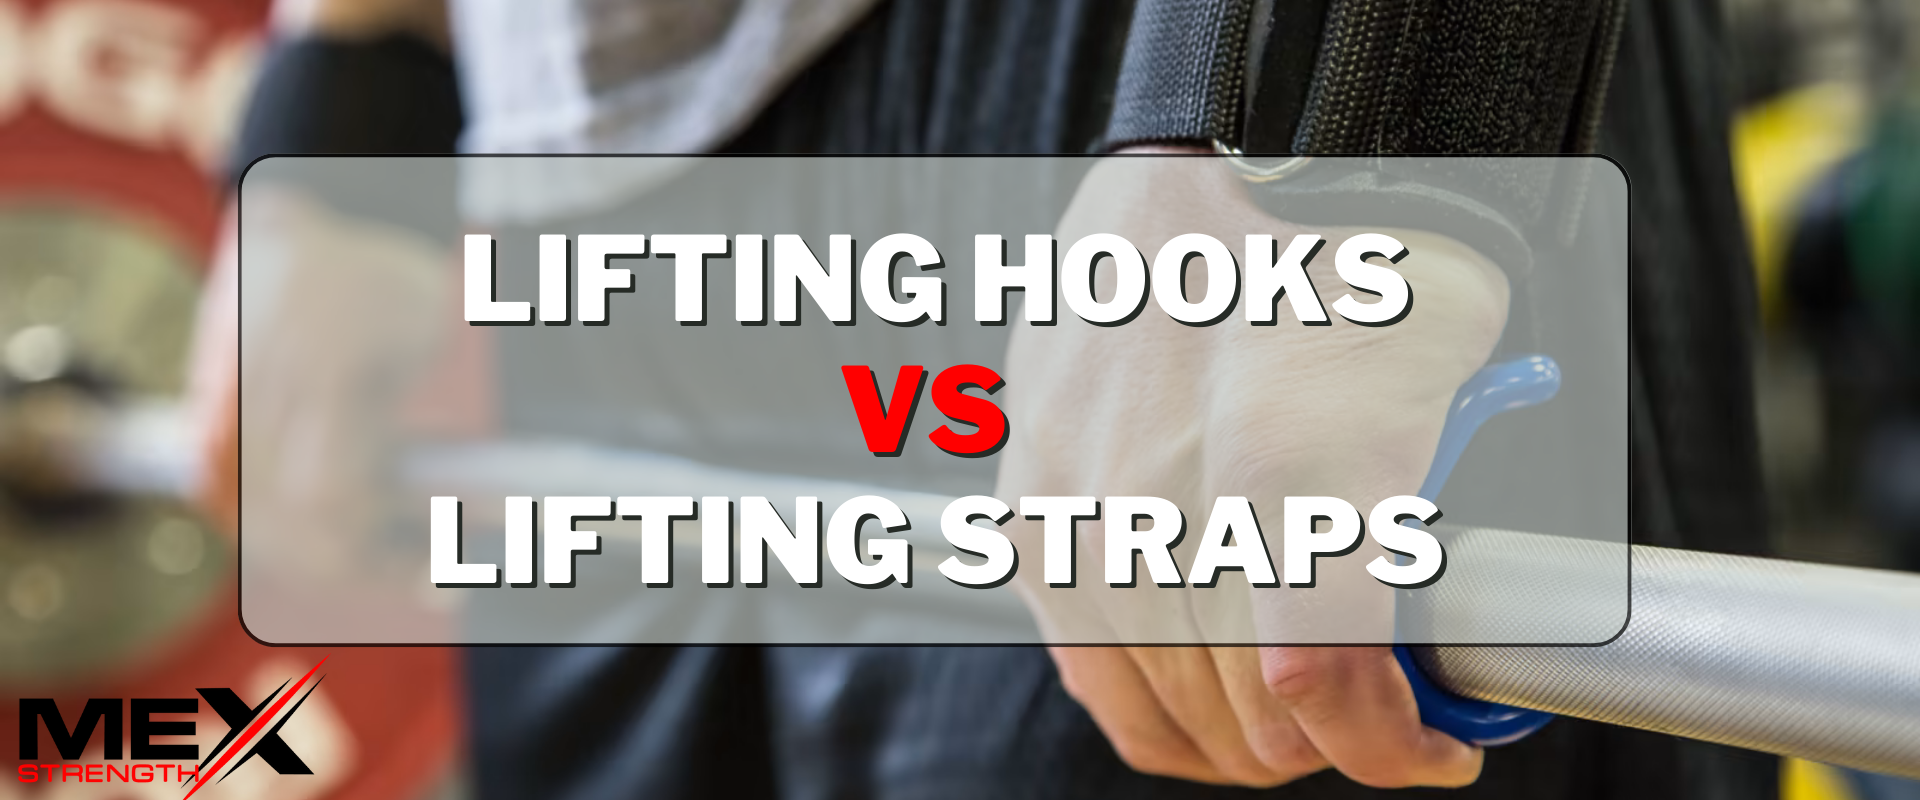 Lifting Hooks vs Lifting Straps